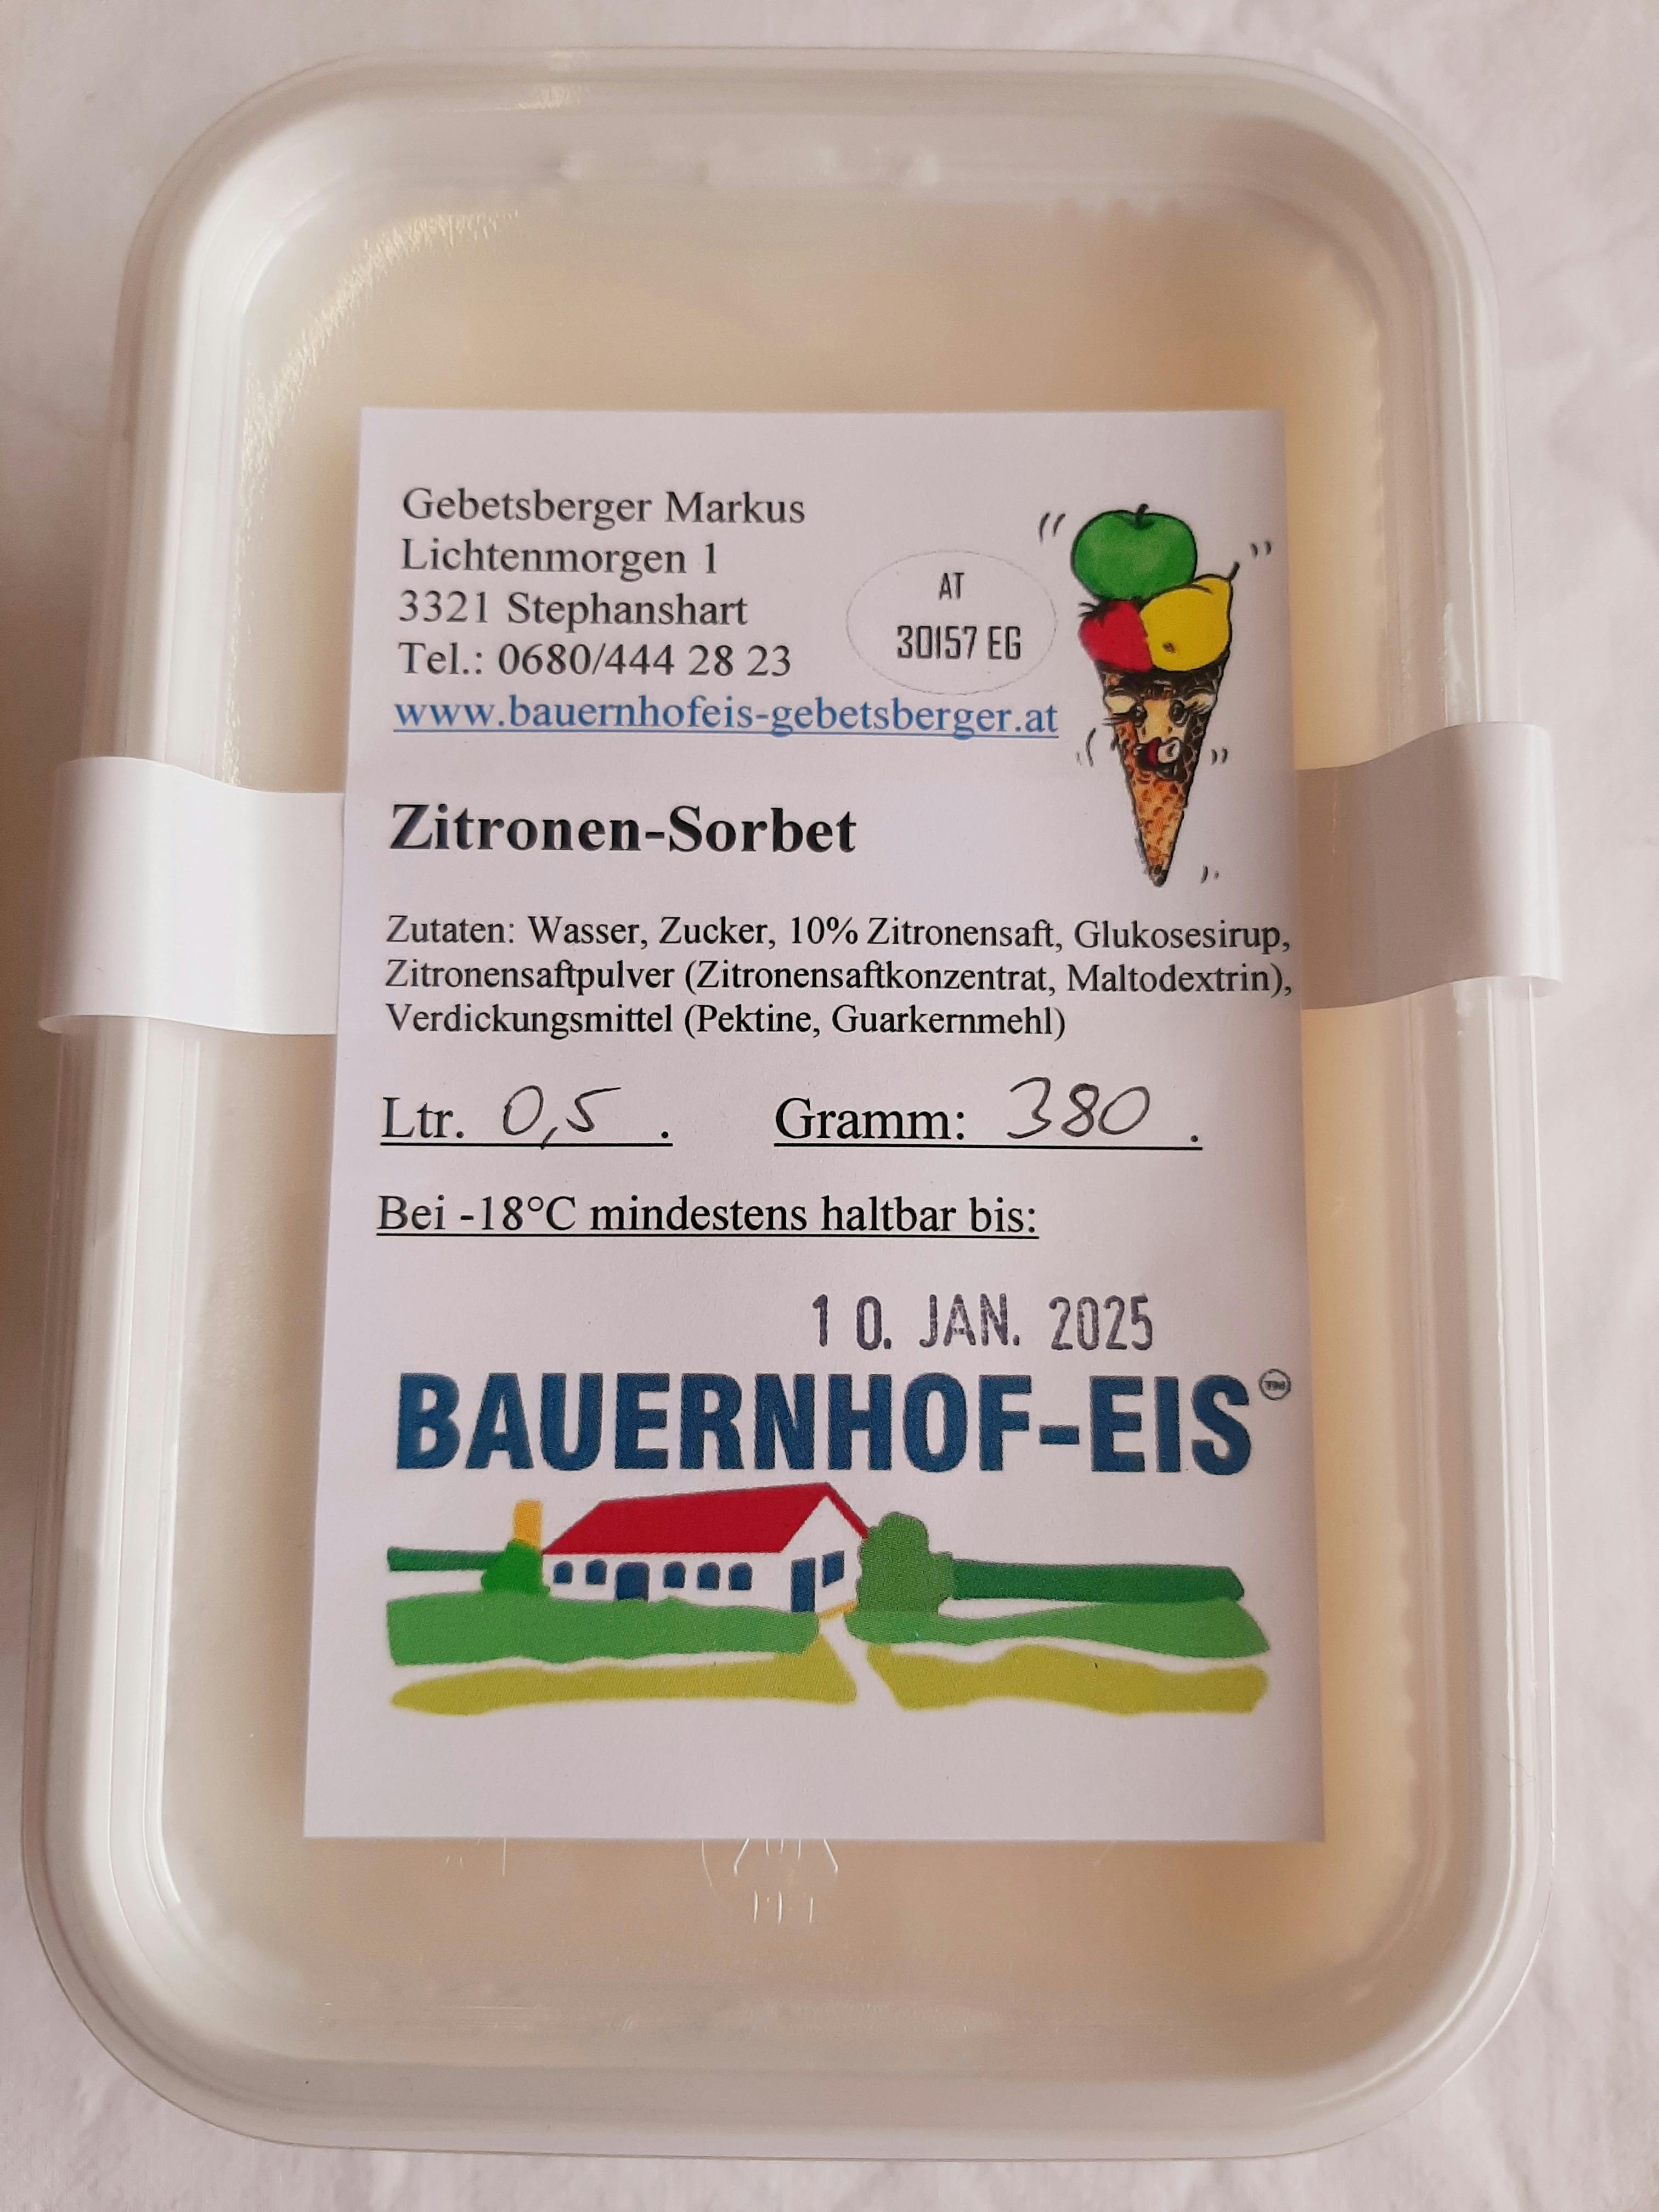 Bauernhofeis - Zitronensorbet